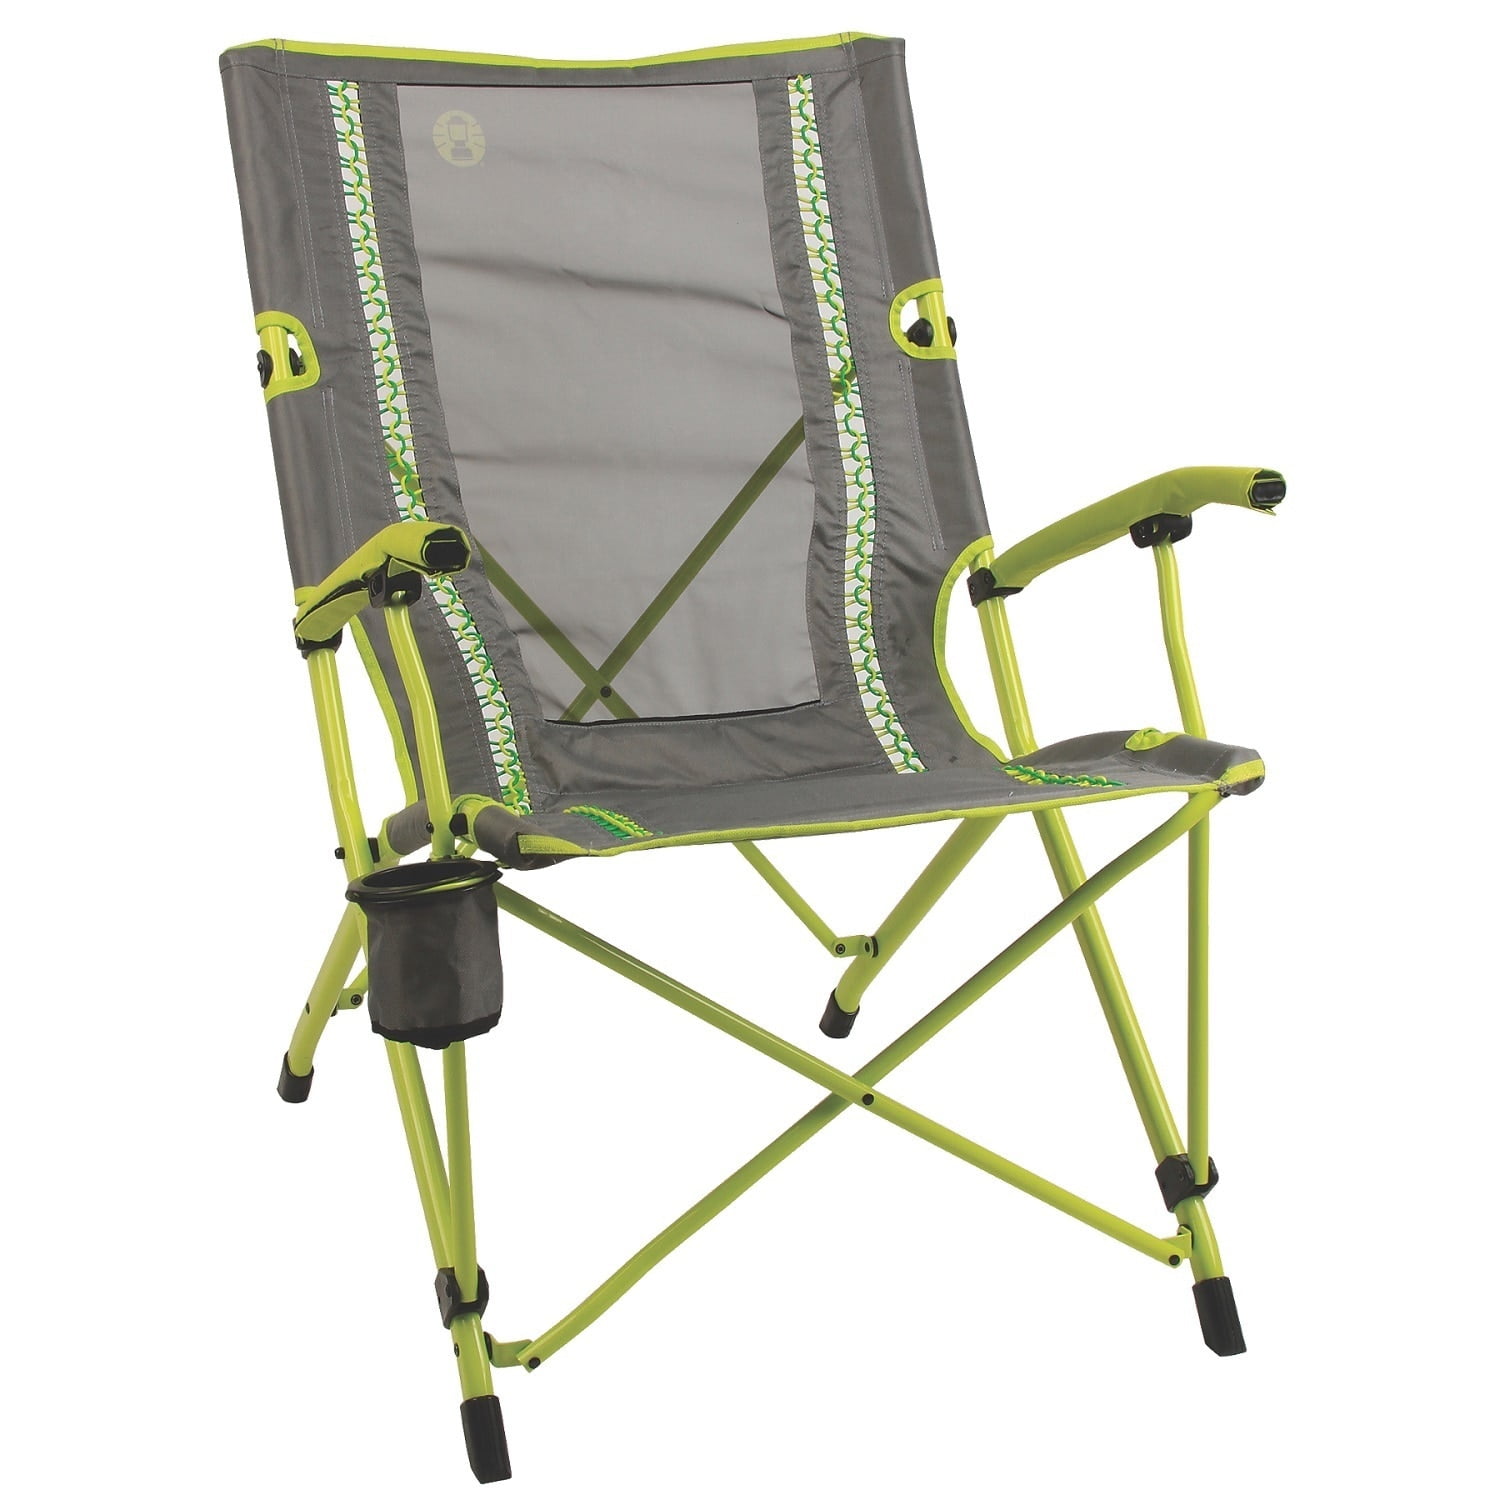 Coleman Camping Chair, Gray - Walmart.com - Walmart.com